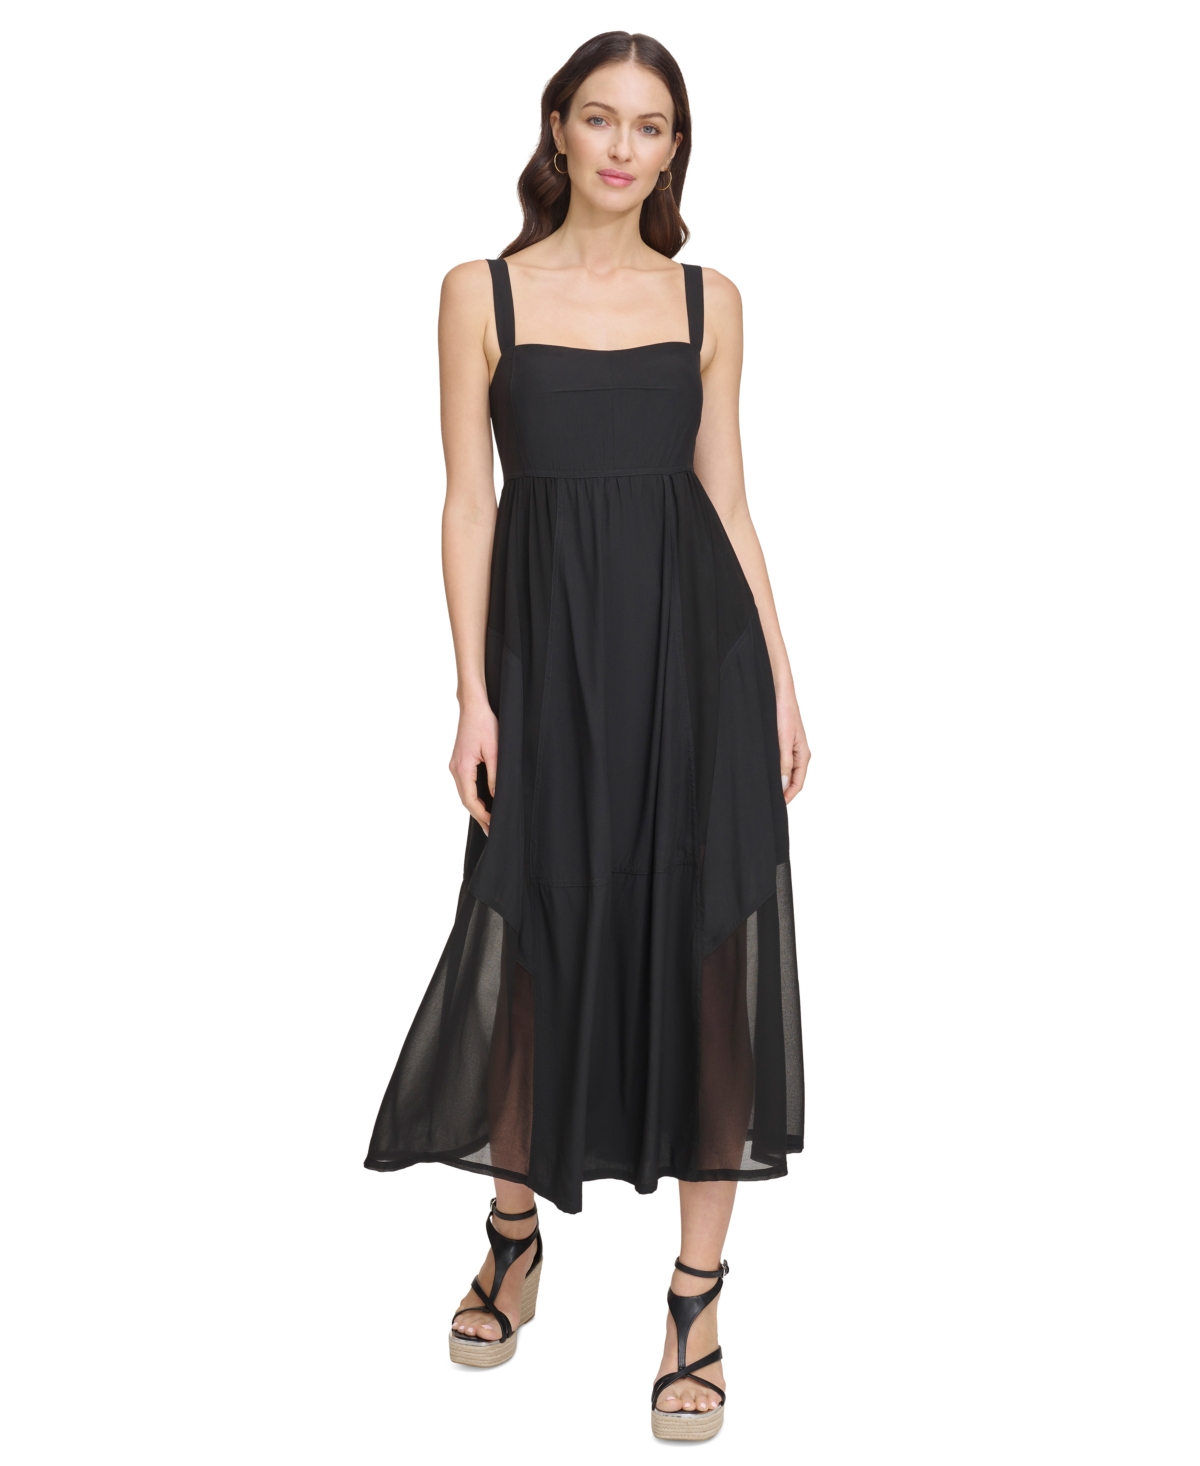 Women's Solid Square-Neck Sleeveless Chiffon Dress - Black